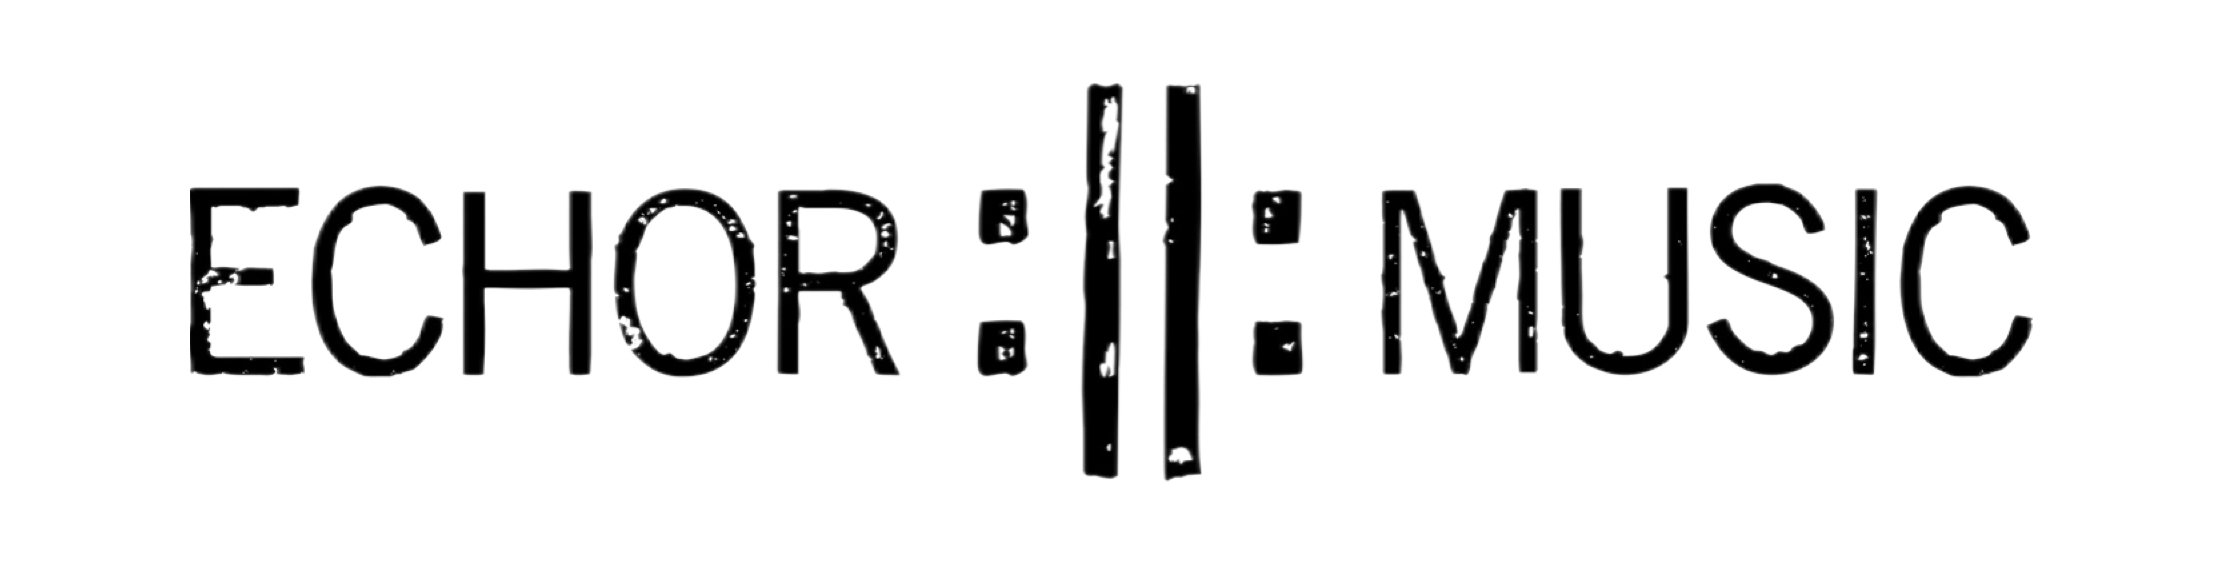 Echor Music logo